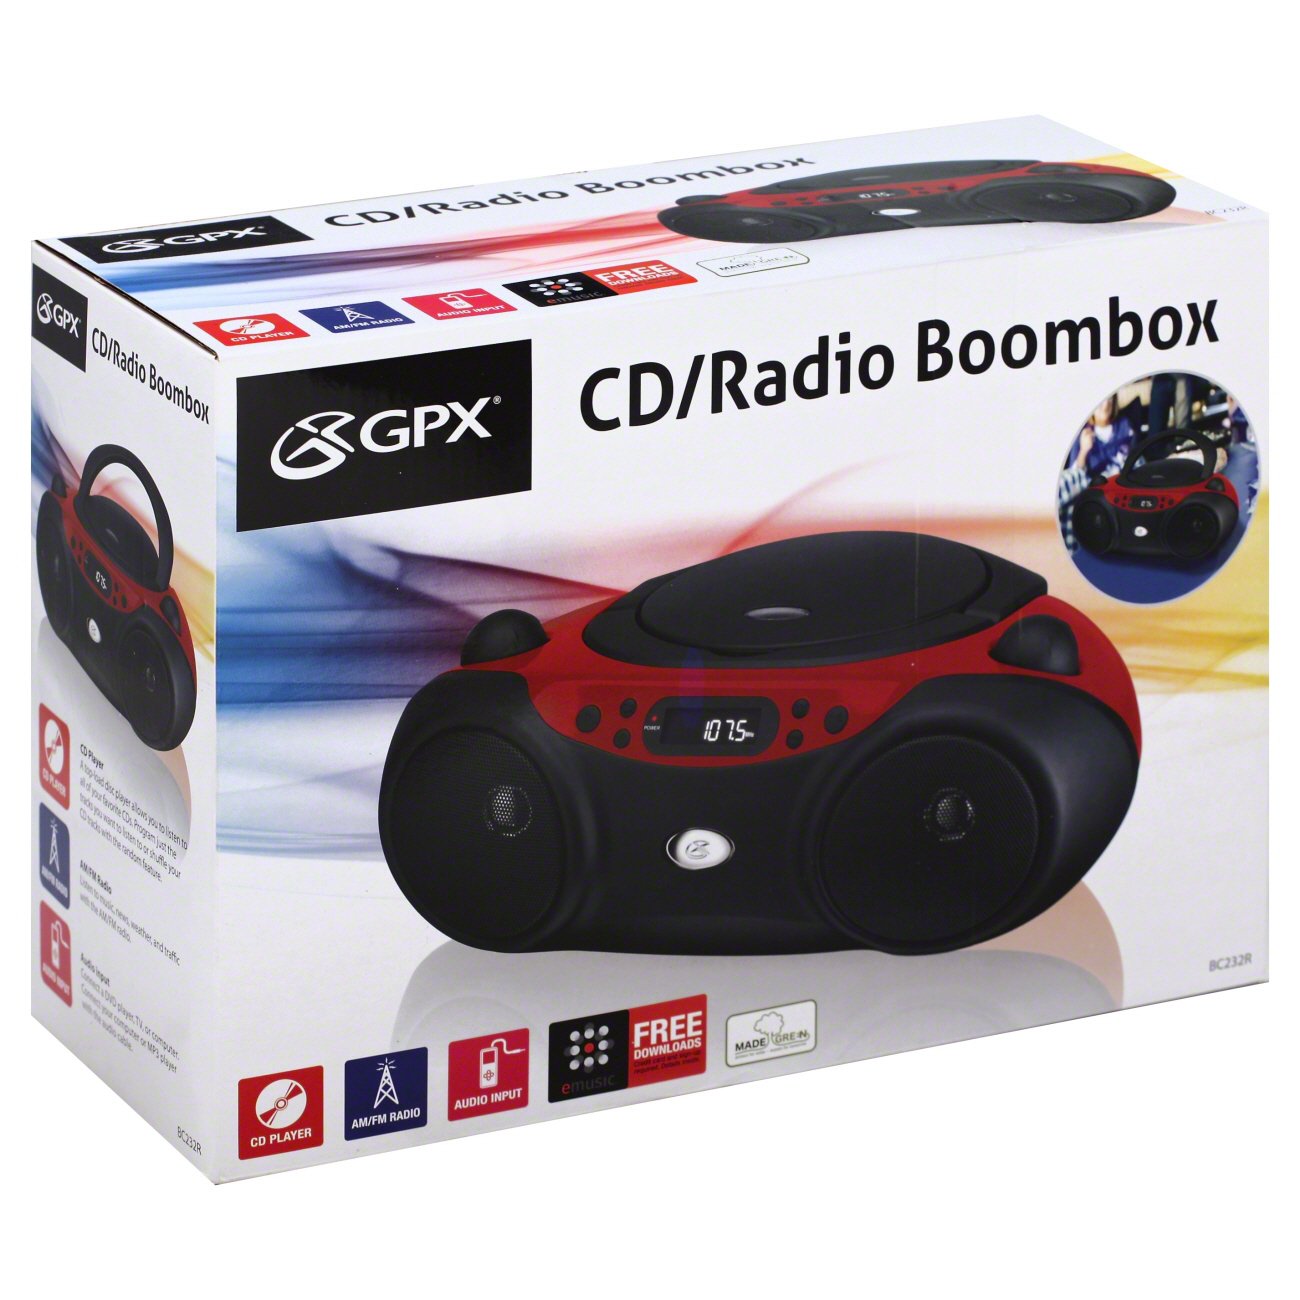 Gpx Cd Radio Boombox Shop Audio At H E B